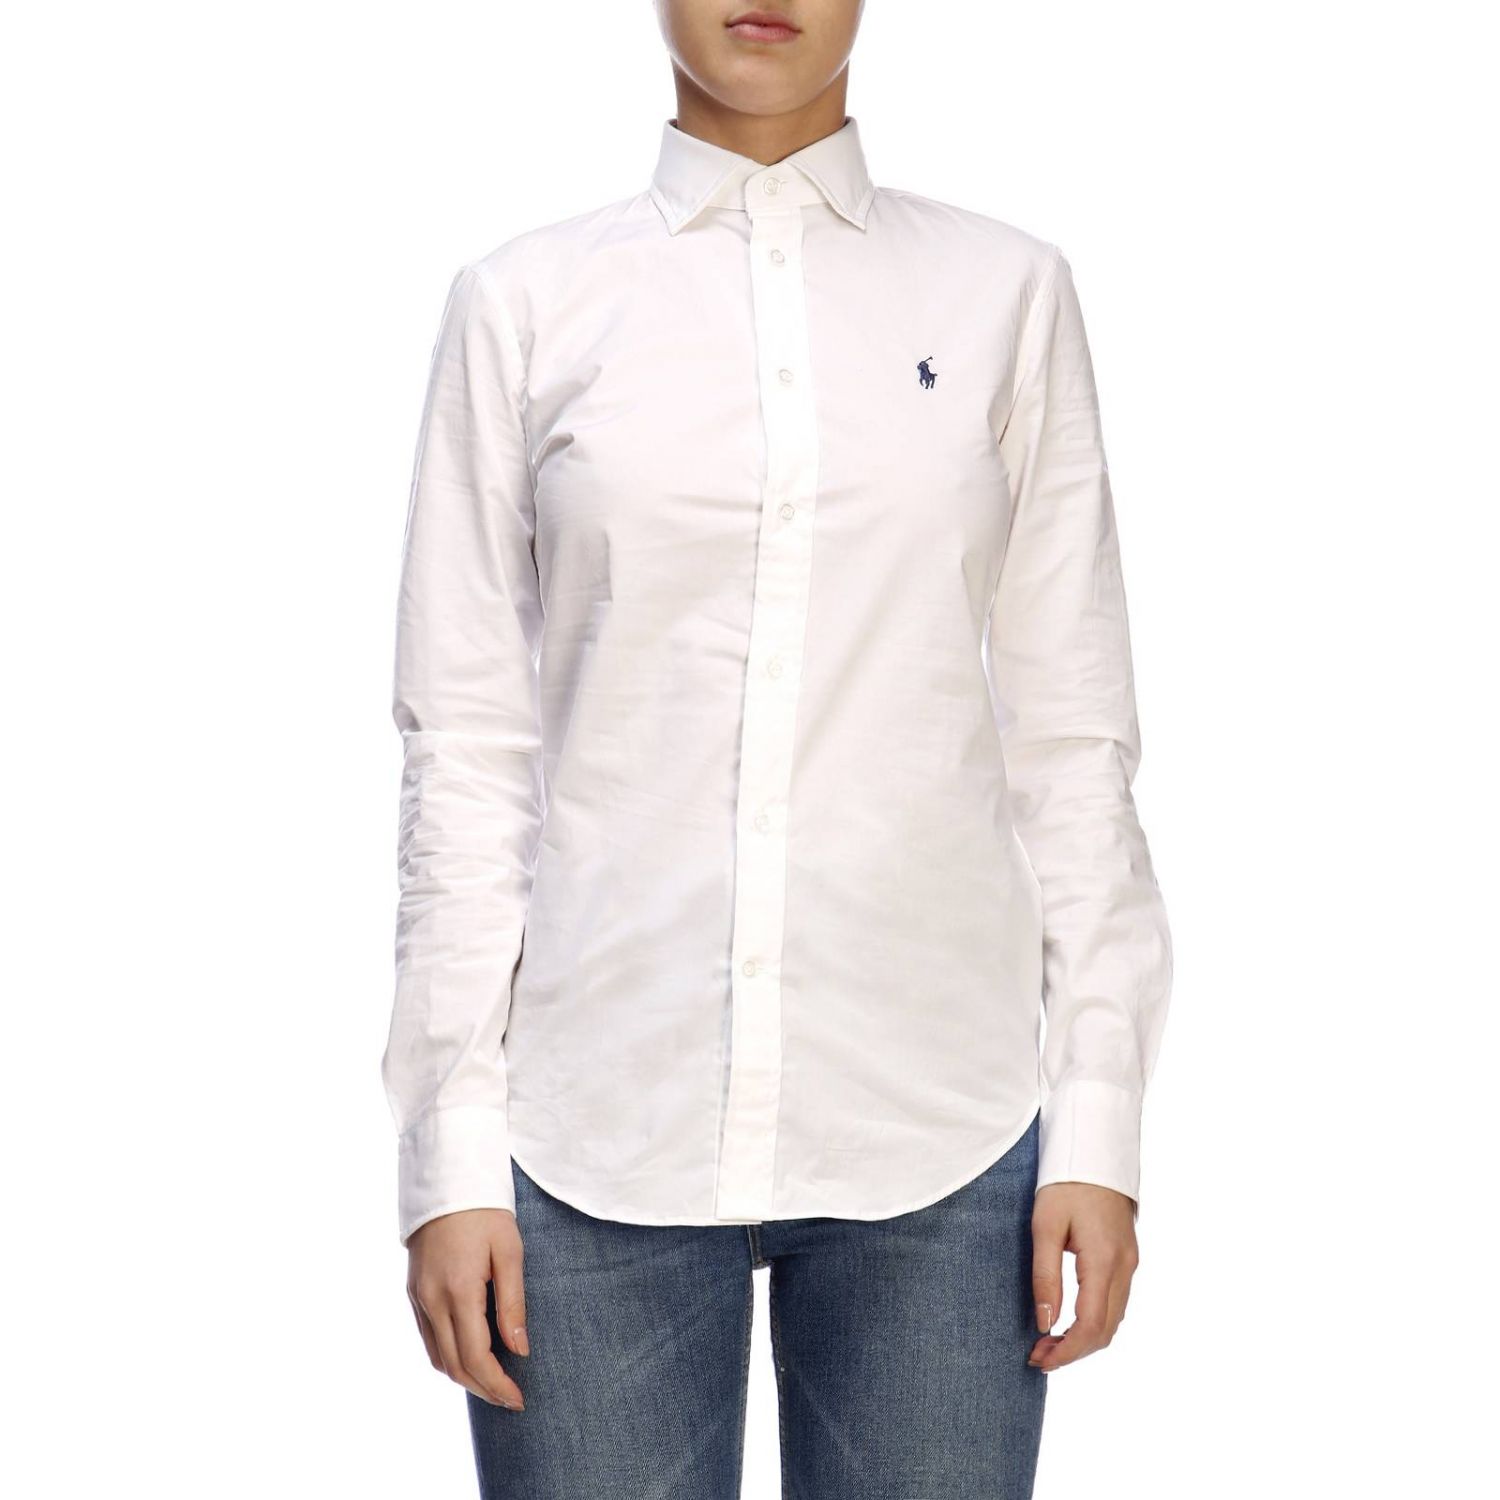 Polo Ralph Lauren Outlet: shirt for woman - White | Polo Ralph Lauren ...